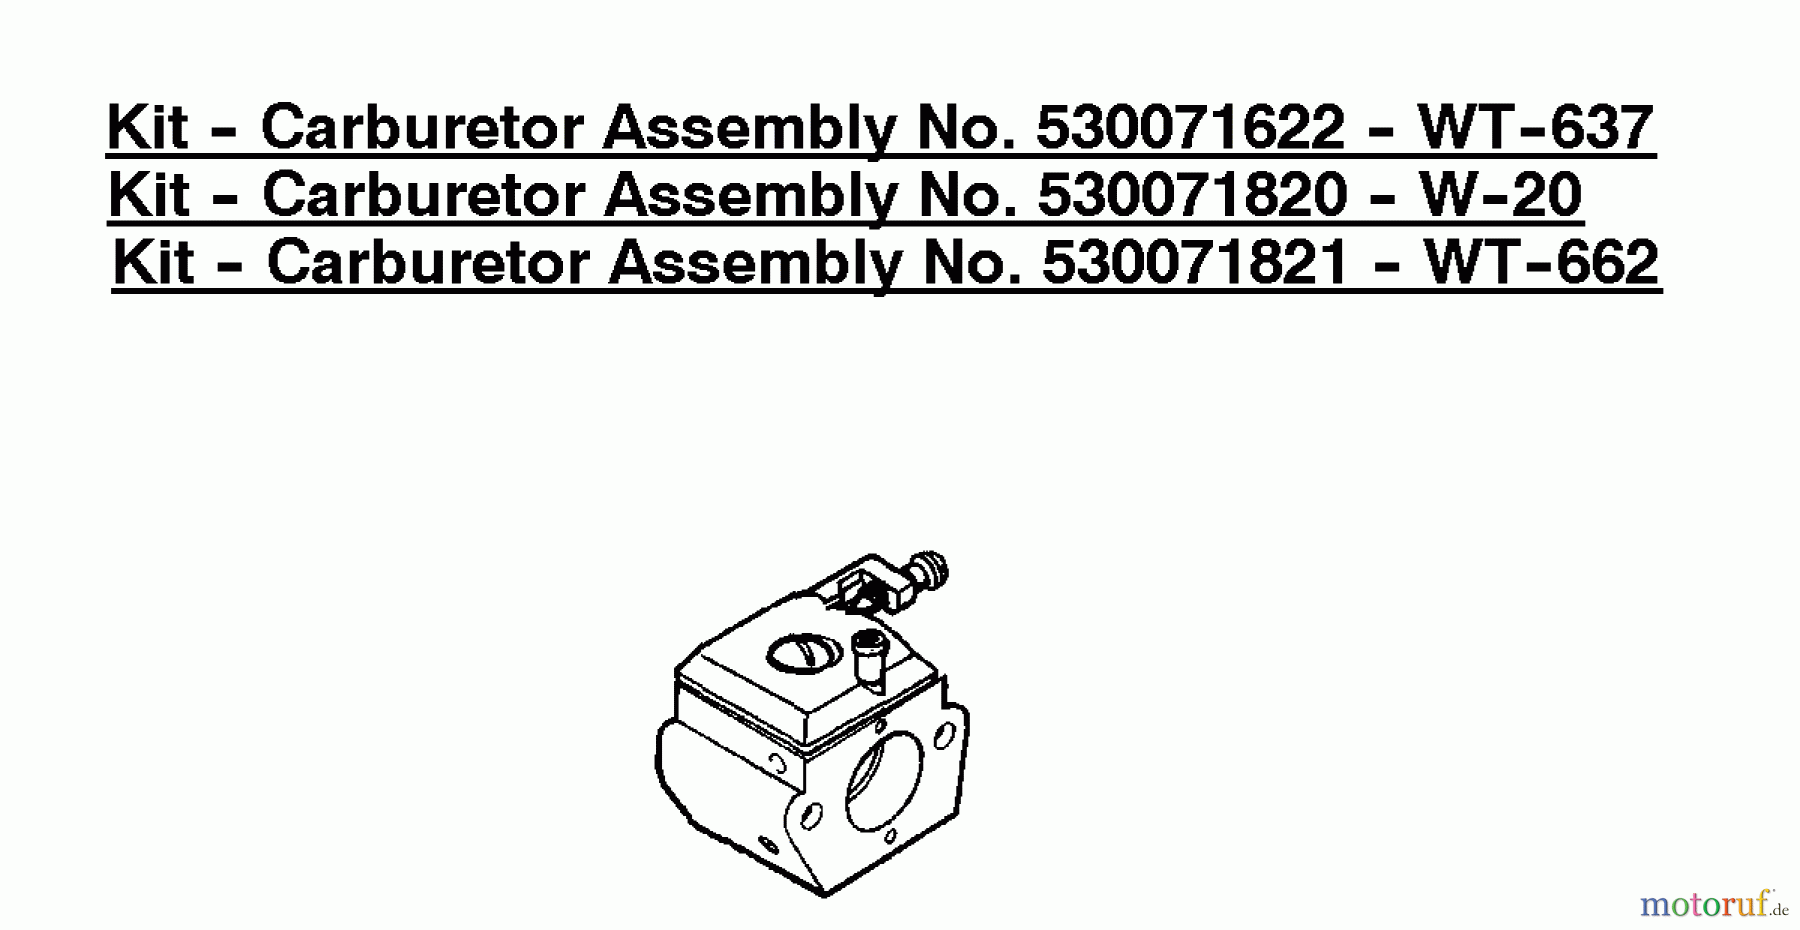  Poulan / Weed Eater Motorsägen 2050LE (Type 2) - Poulan Pioneer Chainsaw Kit - Carburetor Assembly